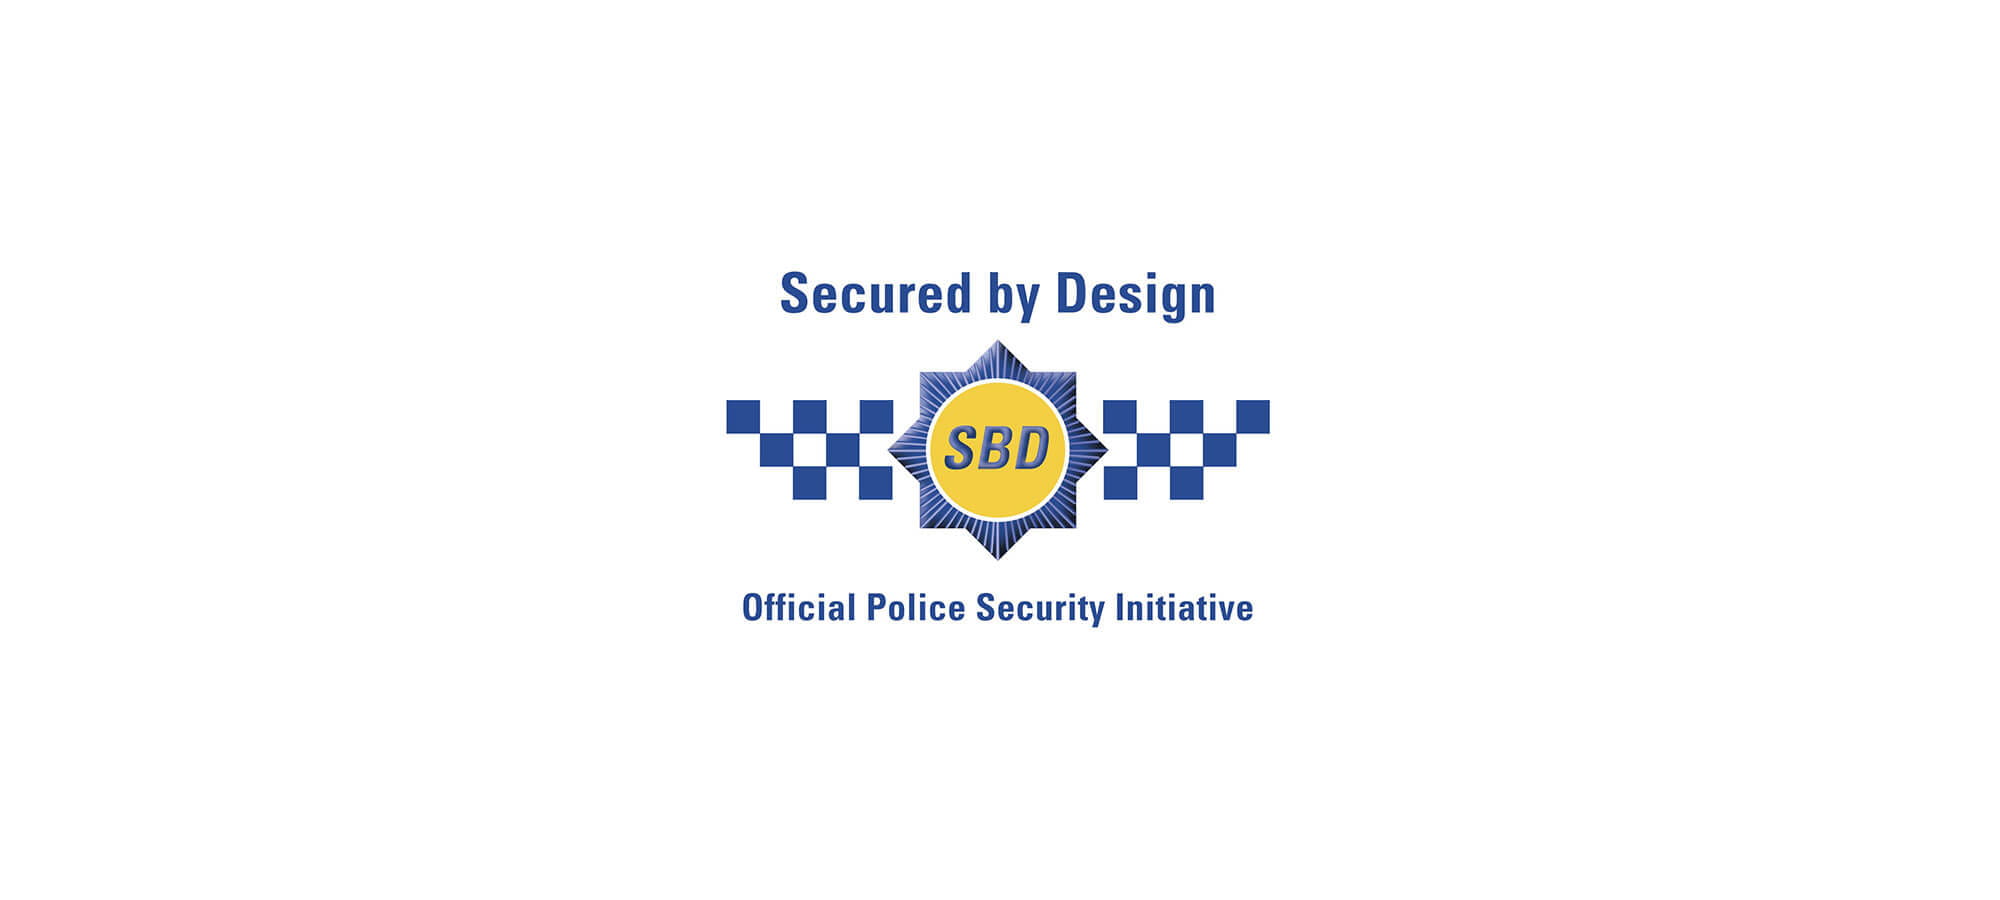 Secured by design